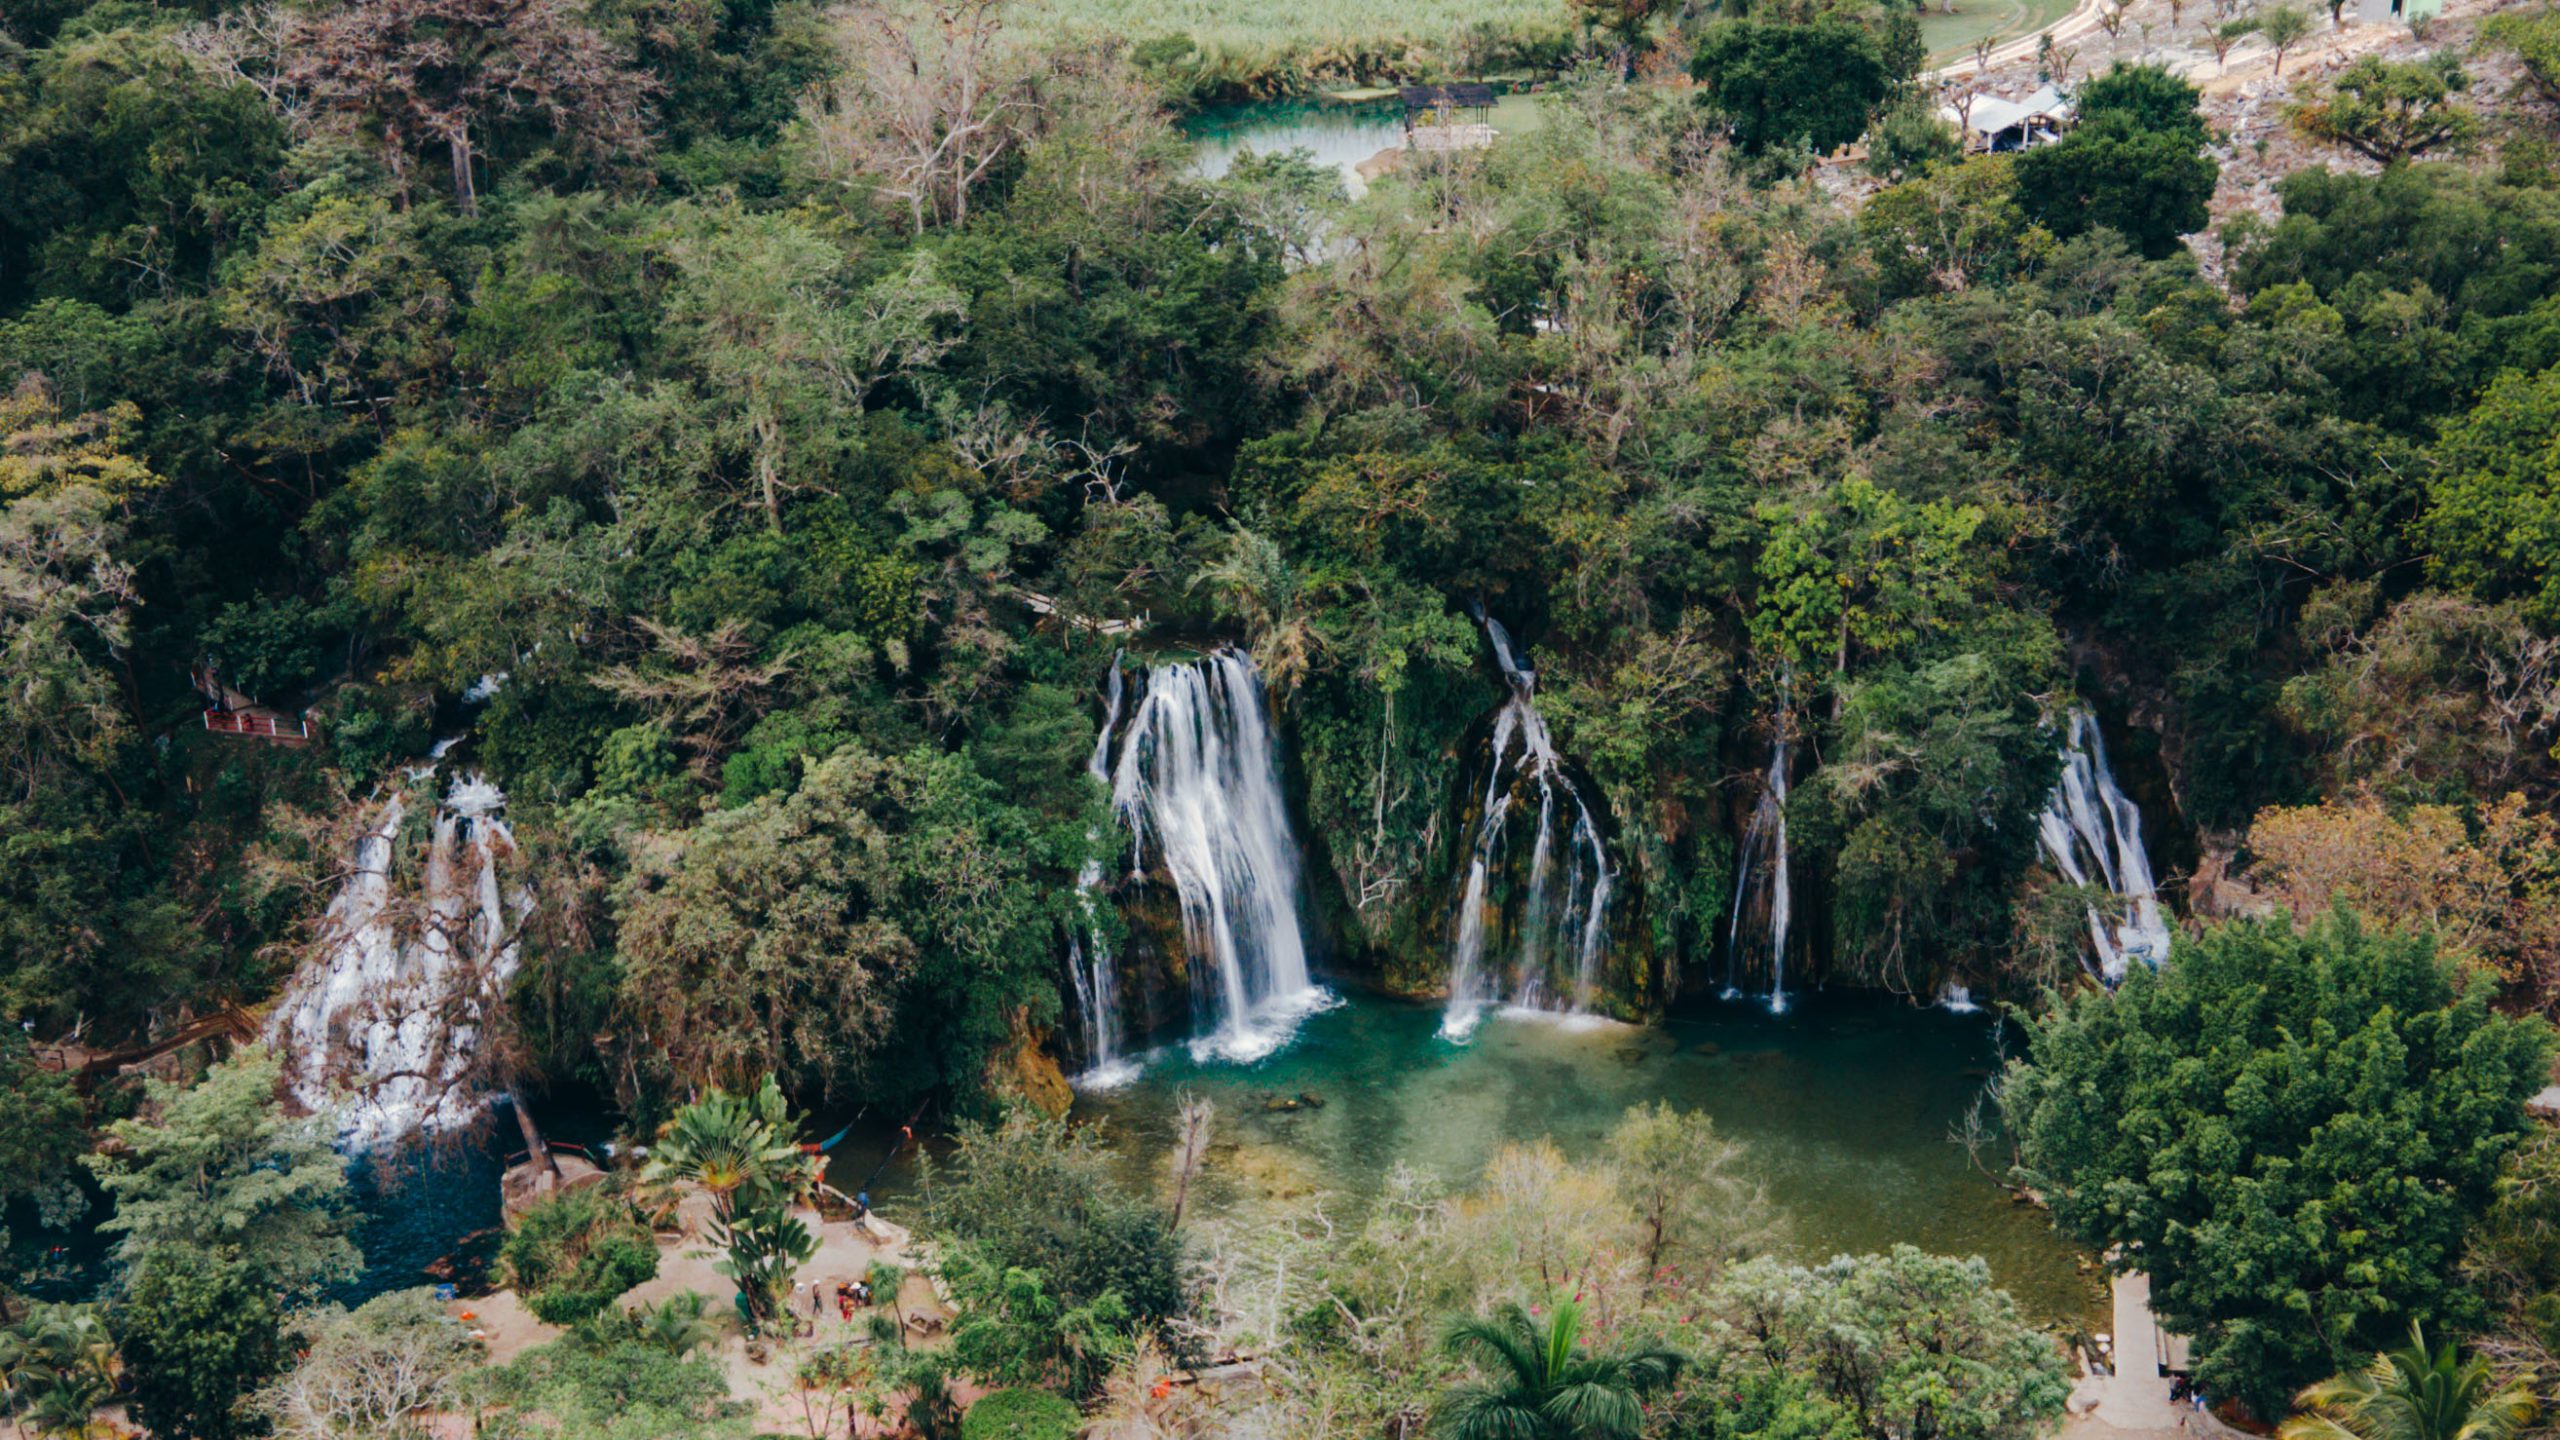 Tamasopo waterfall near Ciudad Valles